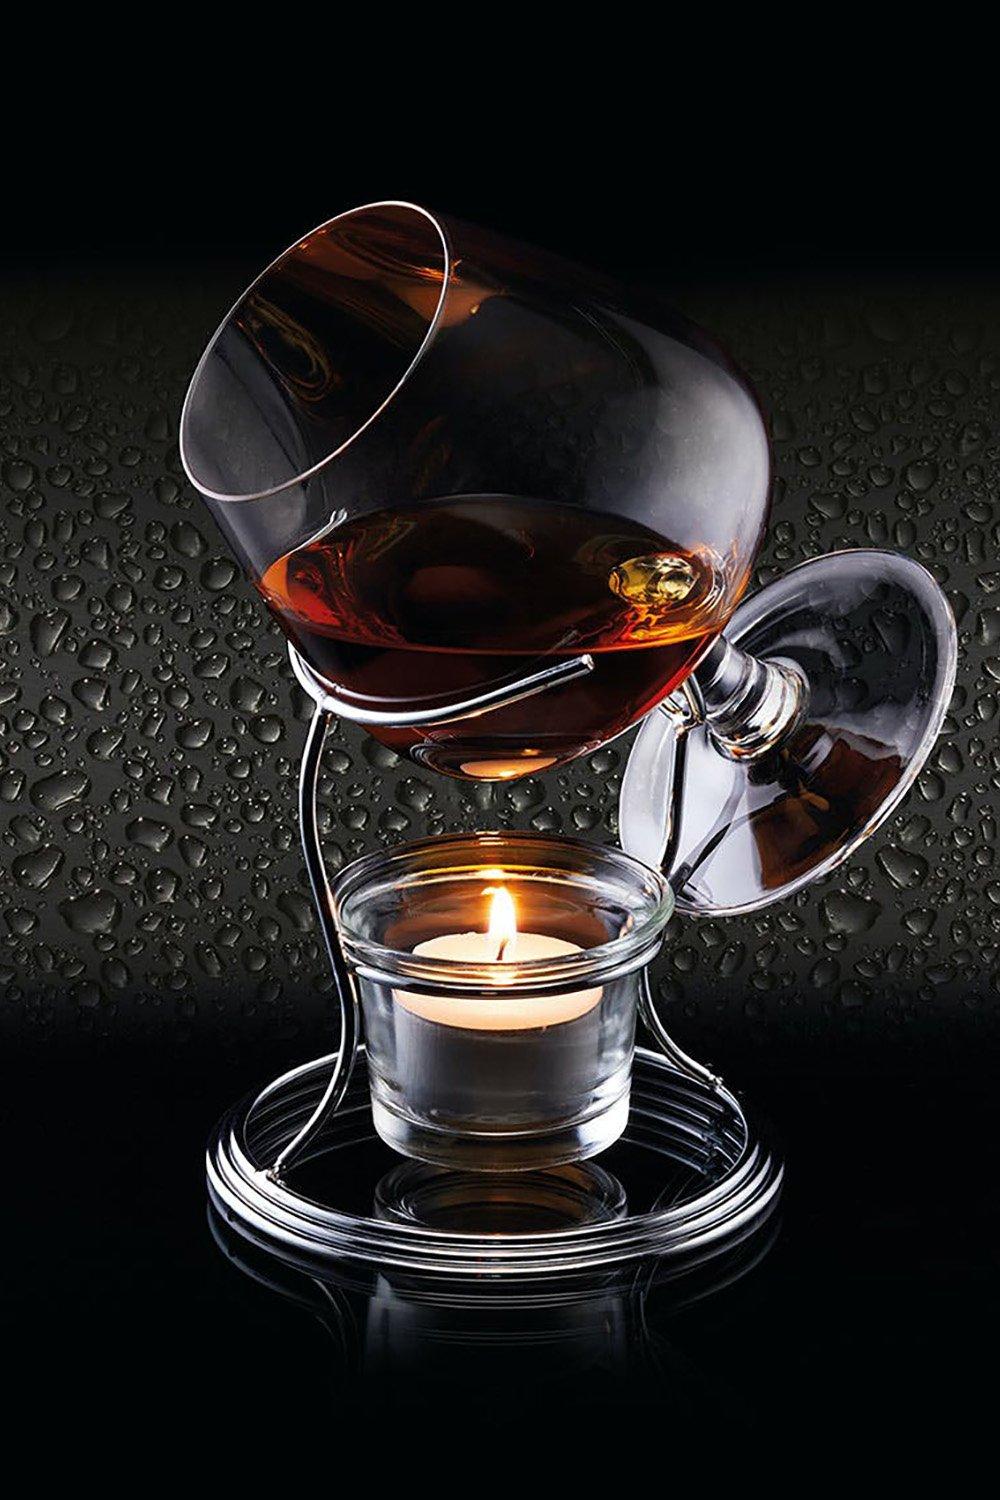 BarCraft Brandy and Cognac Warmer Gift Set